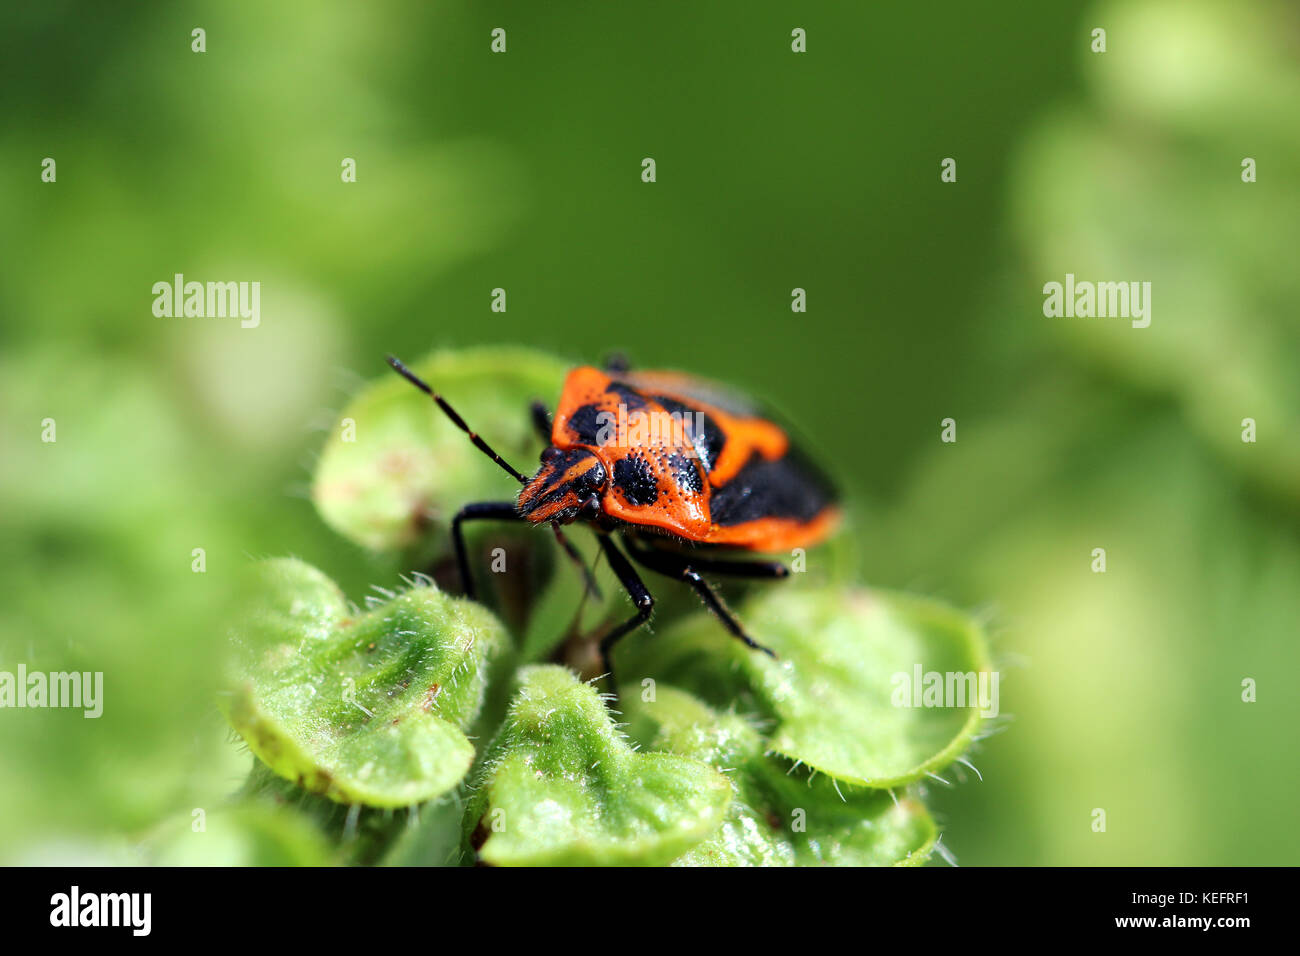 Orange and black bug on leaves Stock Photo